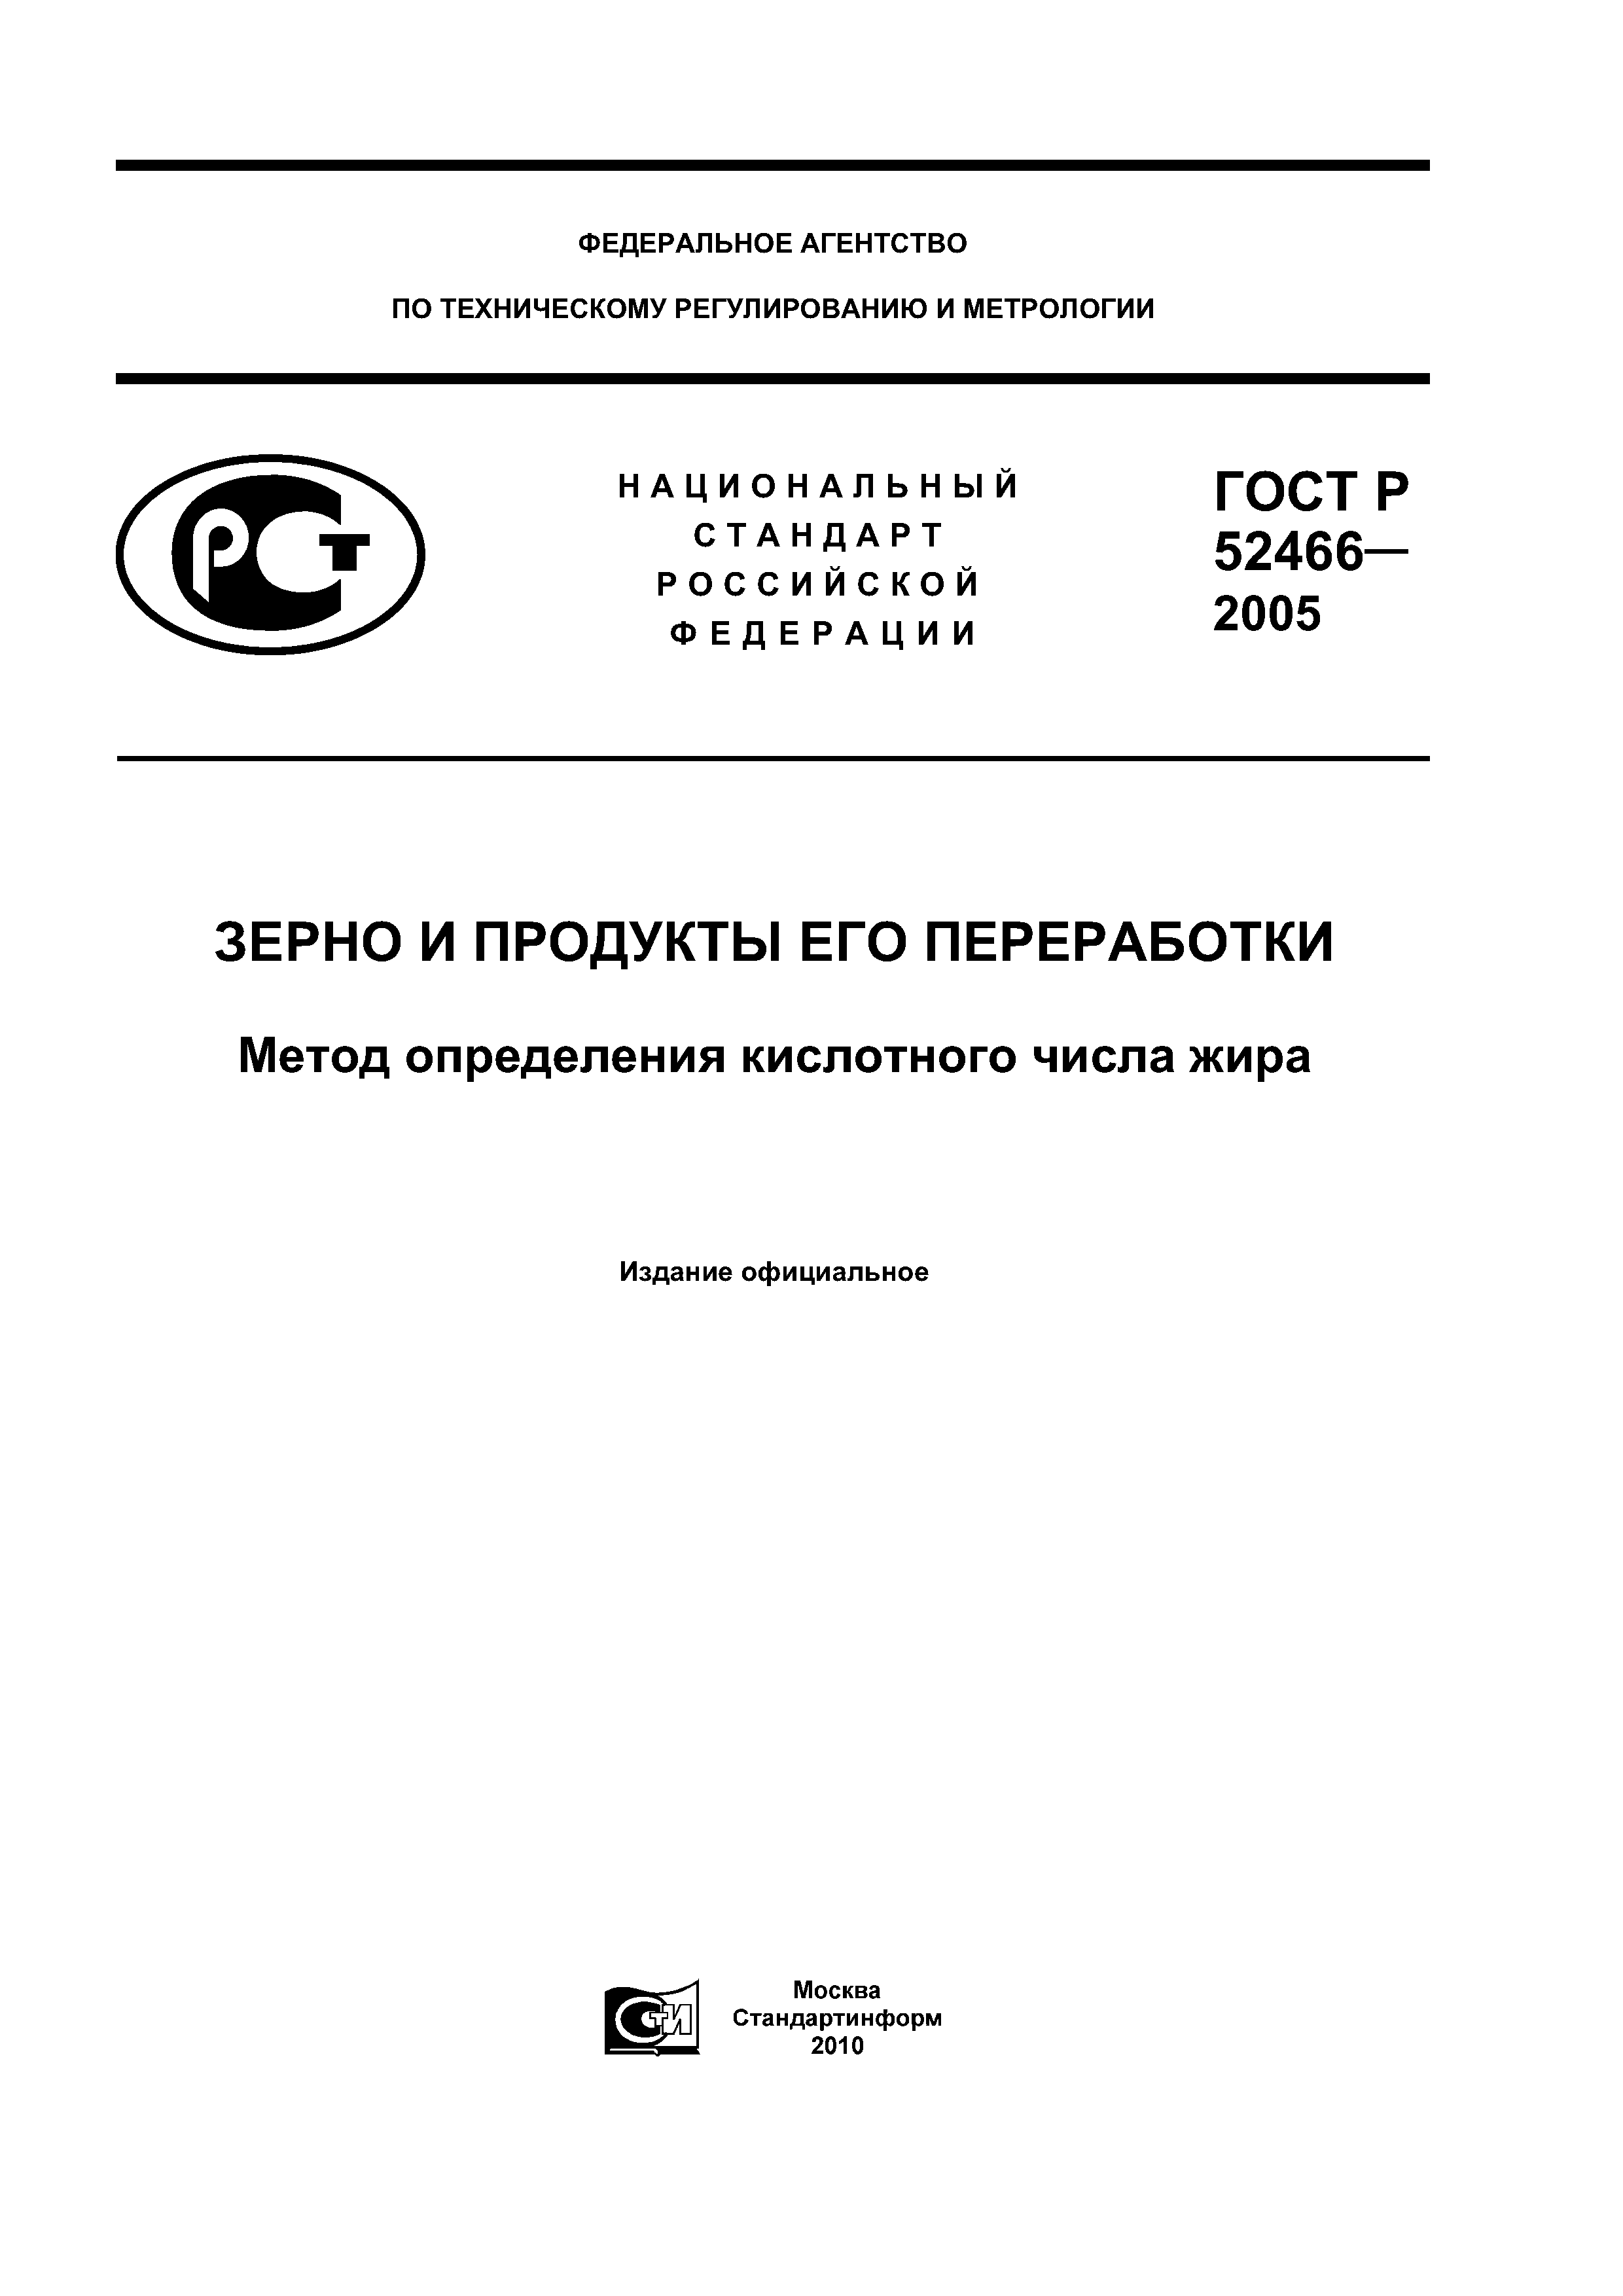 ГОСТ Р 52466-2005